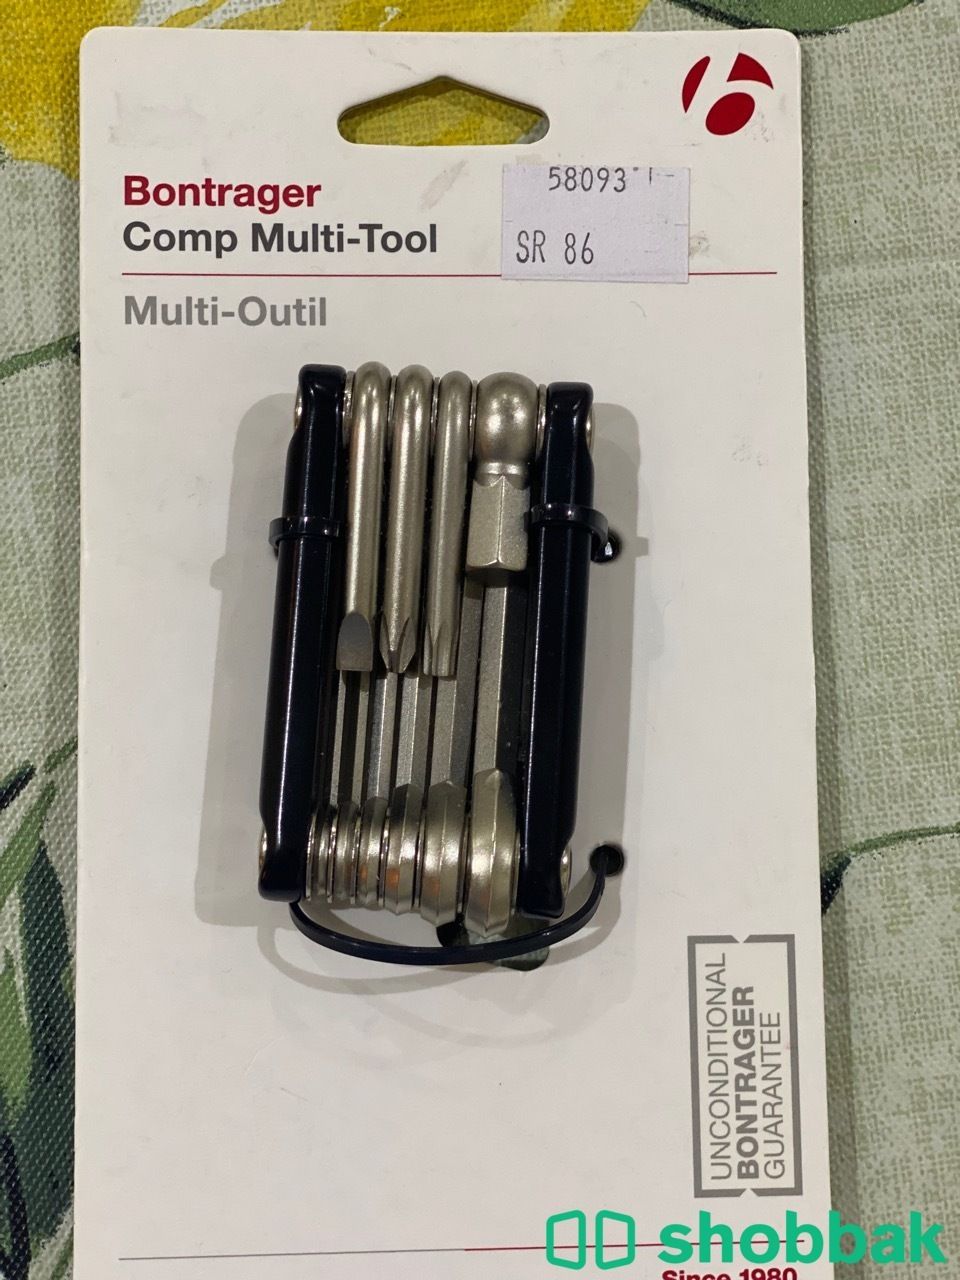 Bontrager comp multi tool Shobbak Saudi Arabia